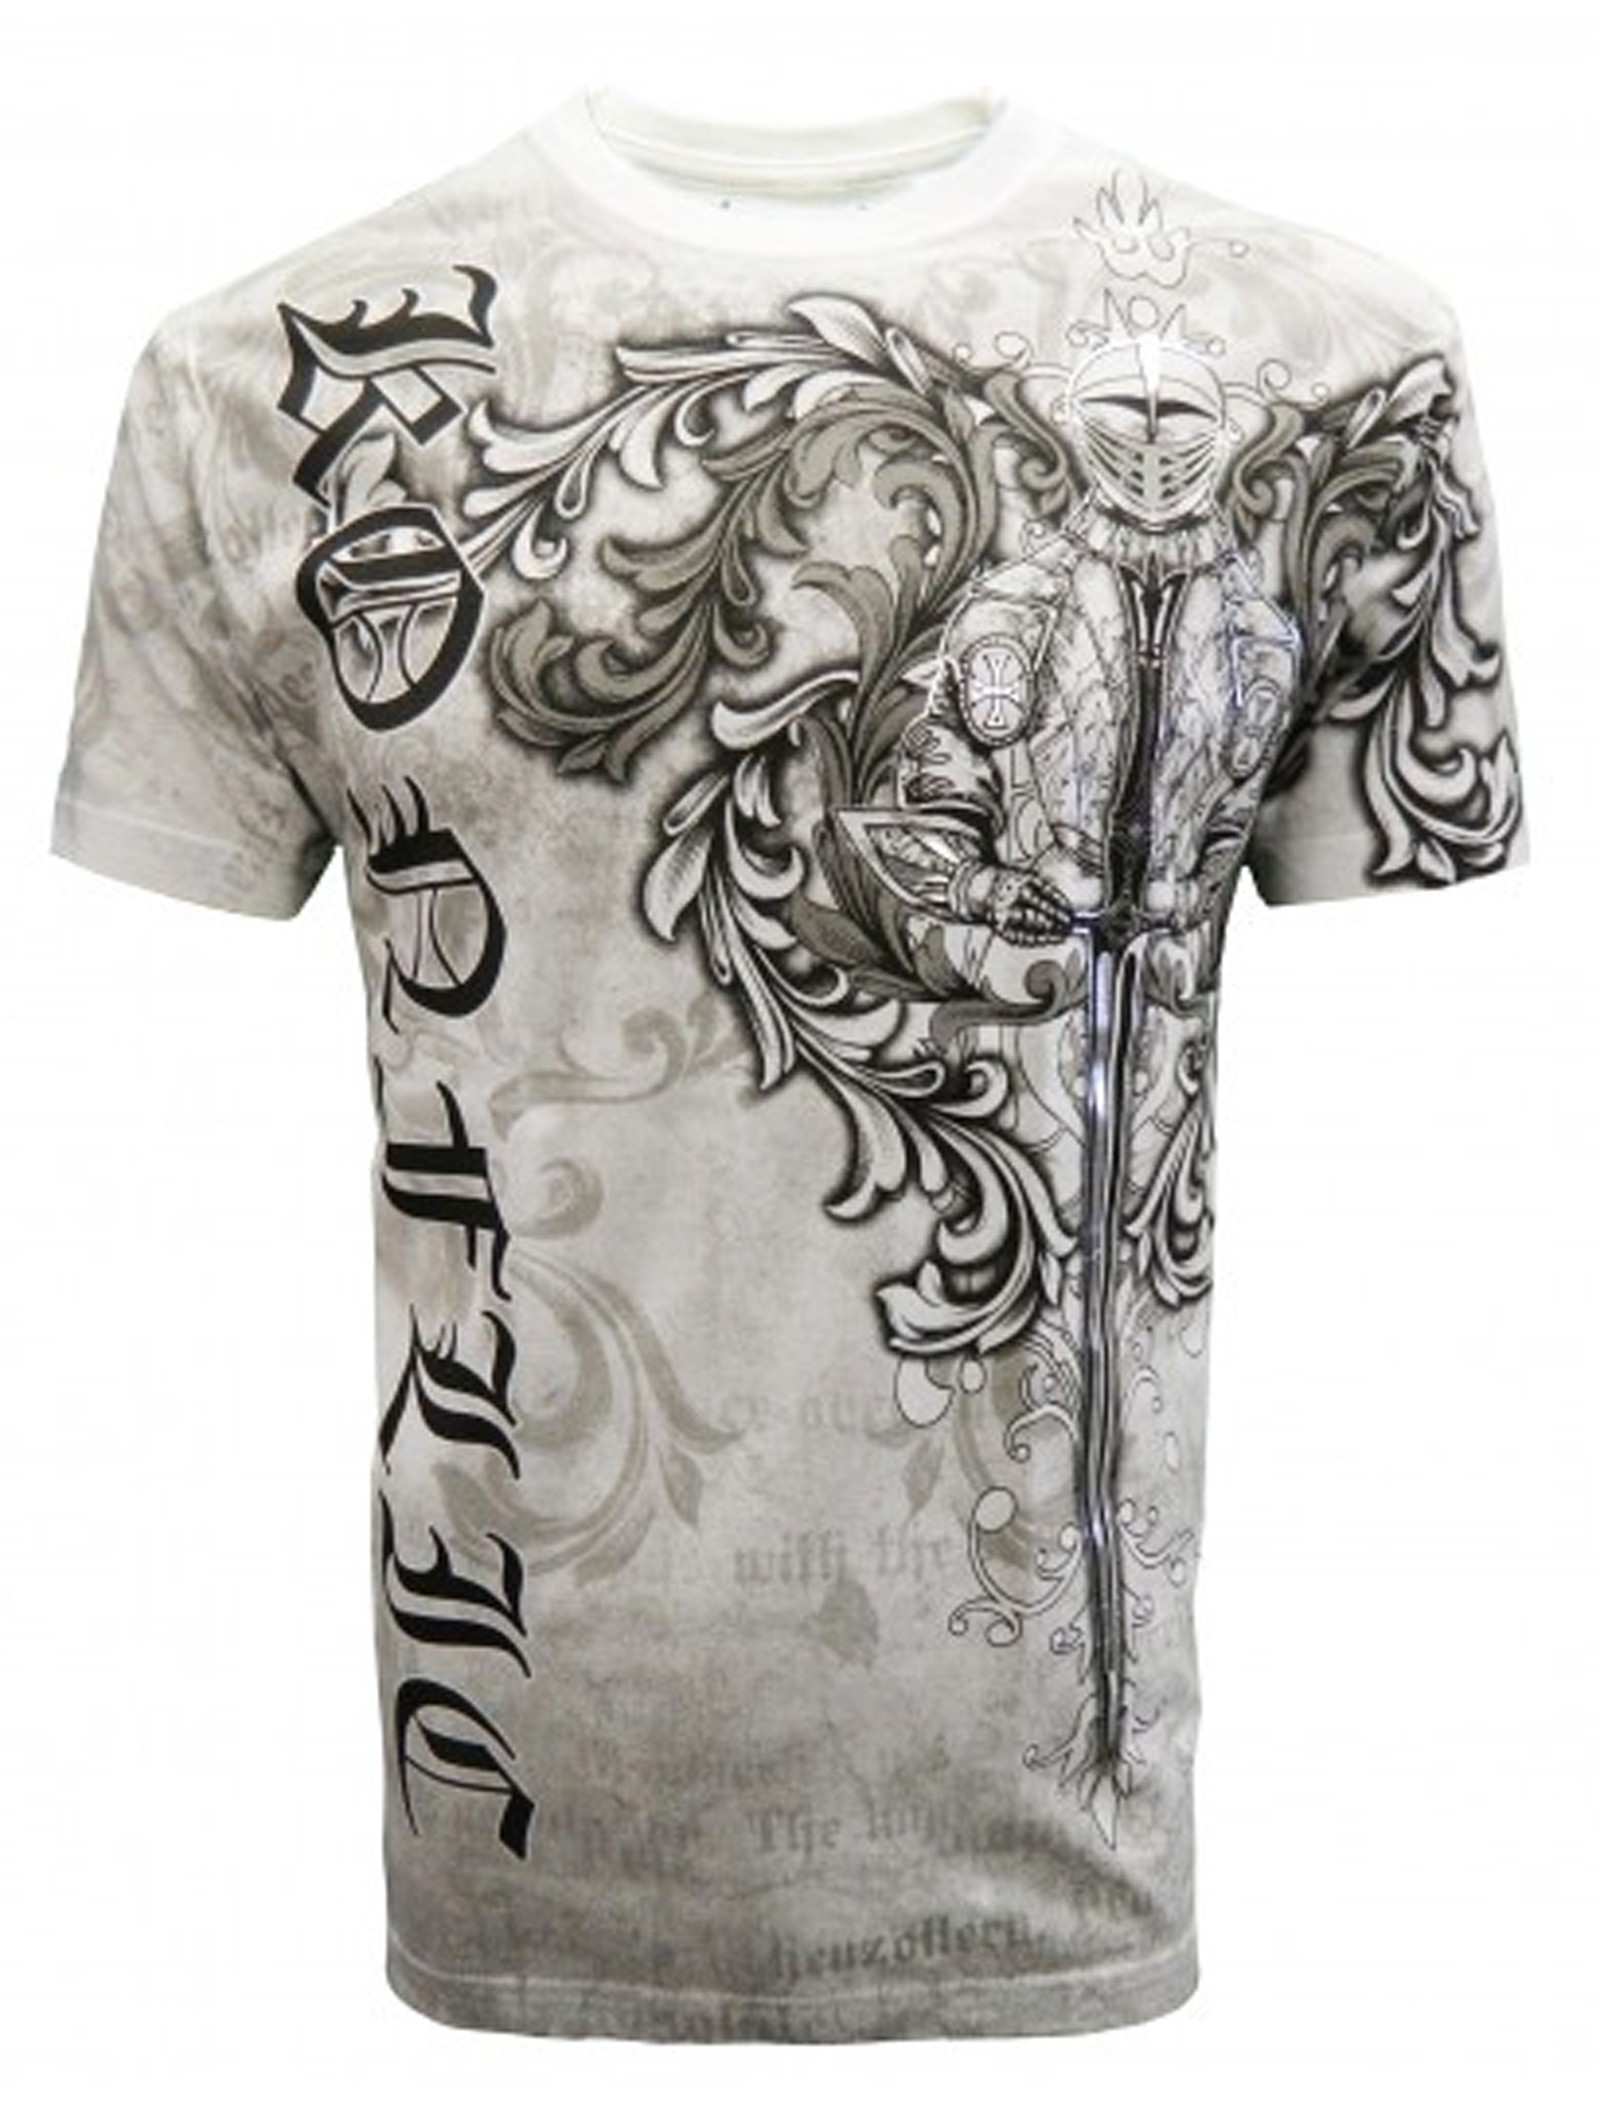 Konflic Clothing - Knight Wars T-Shirt